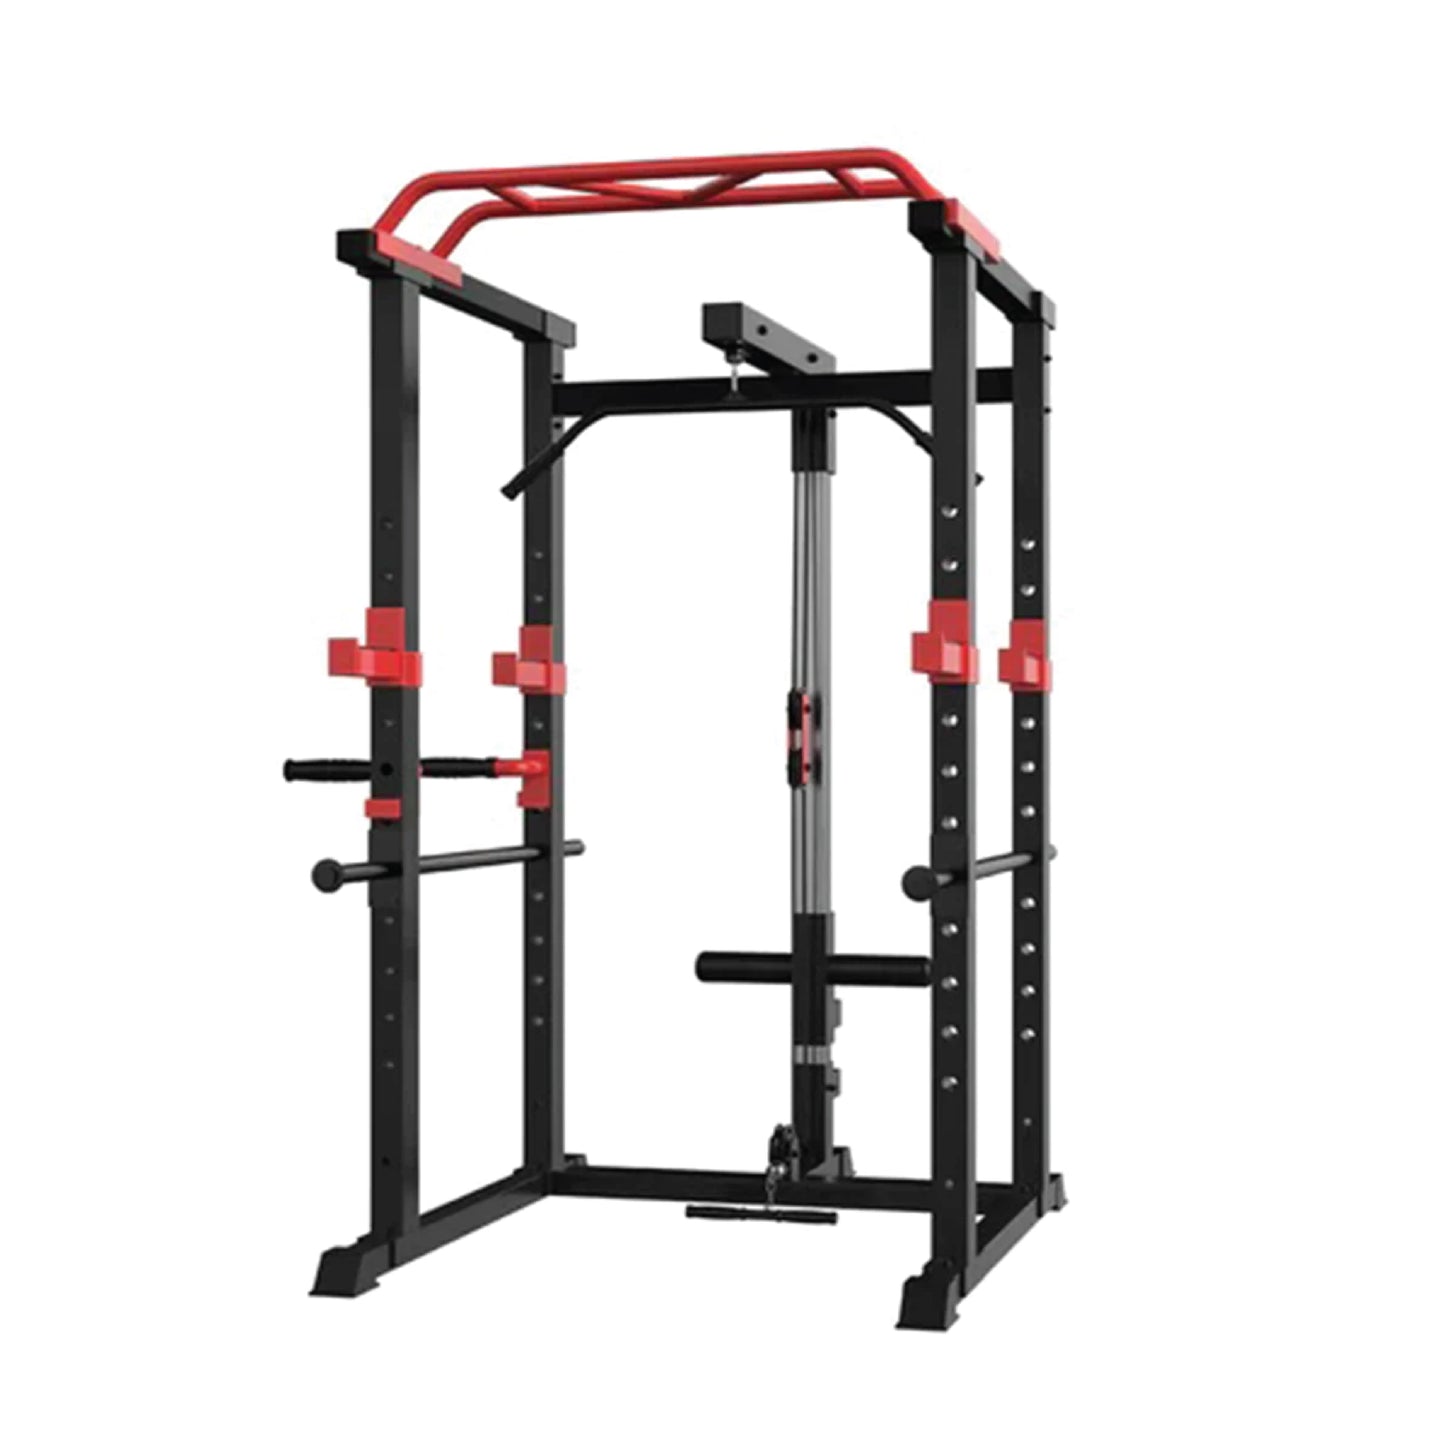 Combo Offer | Power Cage Squat Rack J008 +80 KG Apus Bumper Plate Set + Adjustable Bench A8007 + 4 X 15 mm Flooring